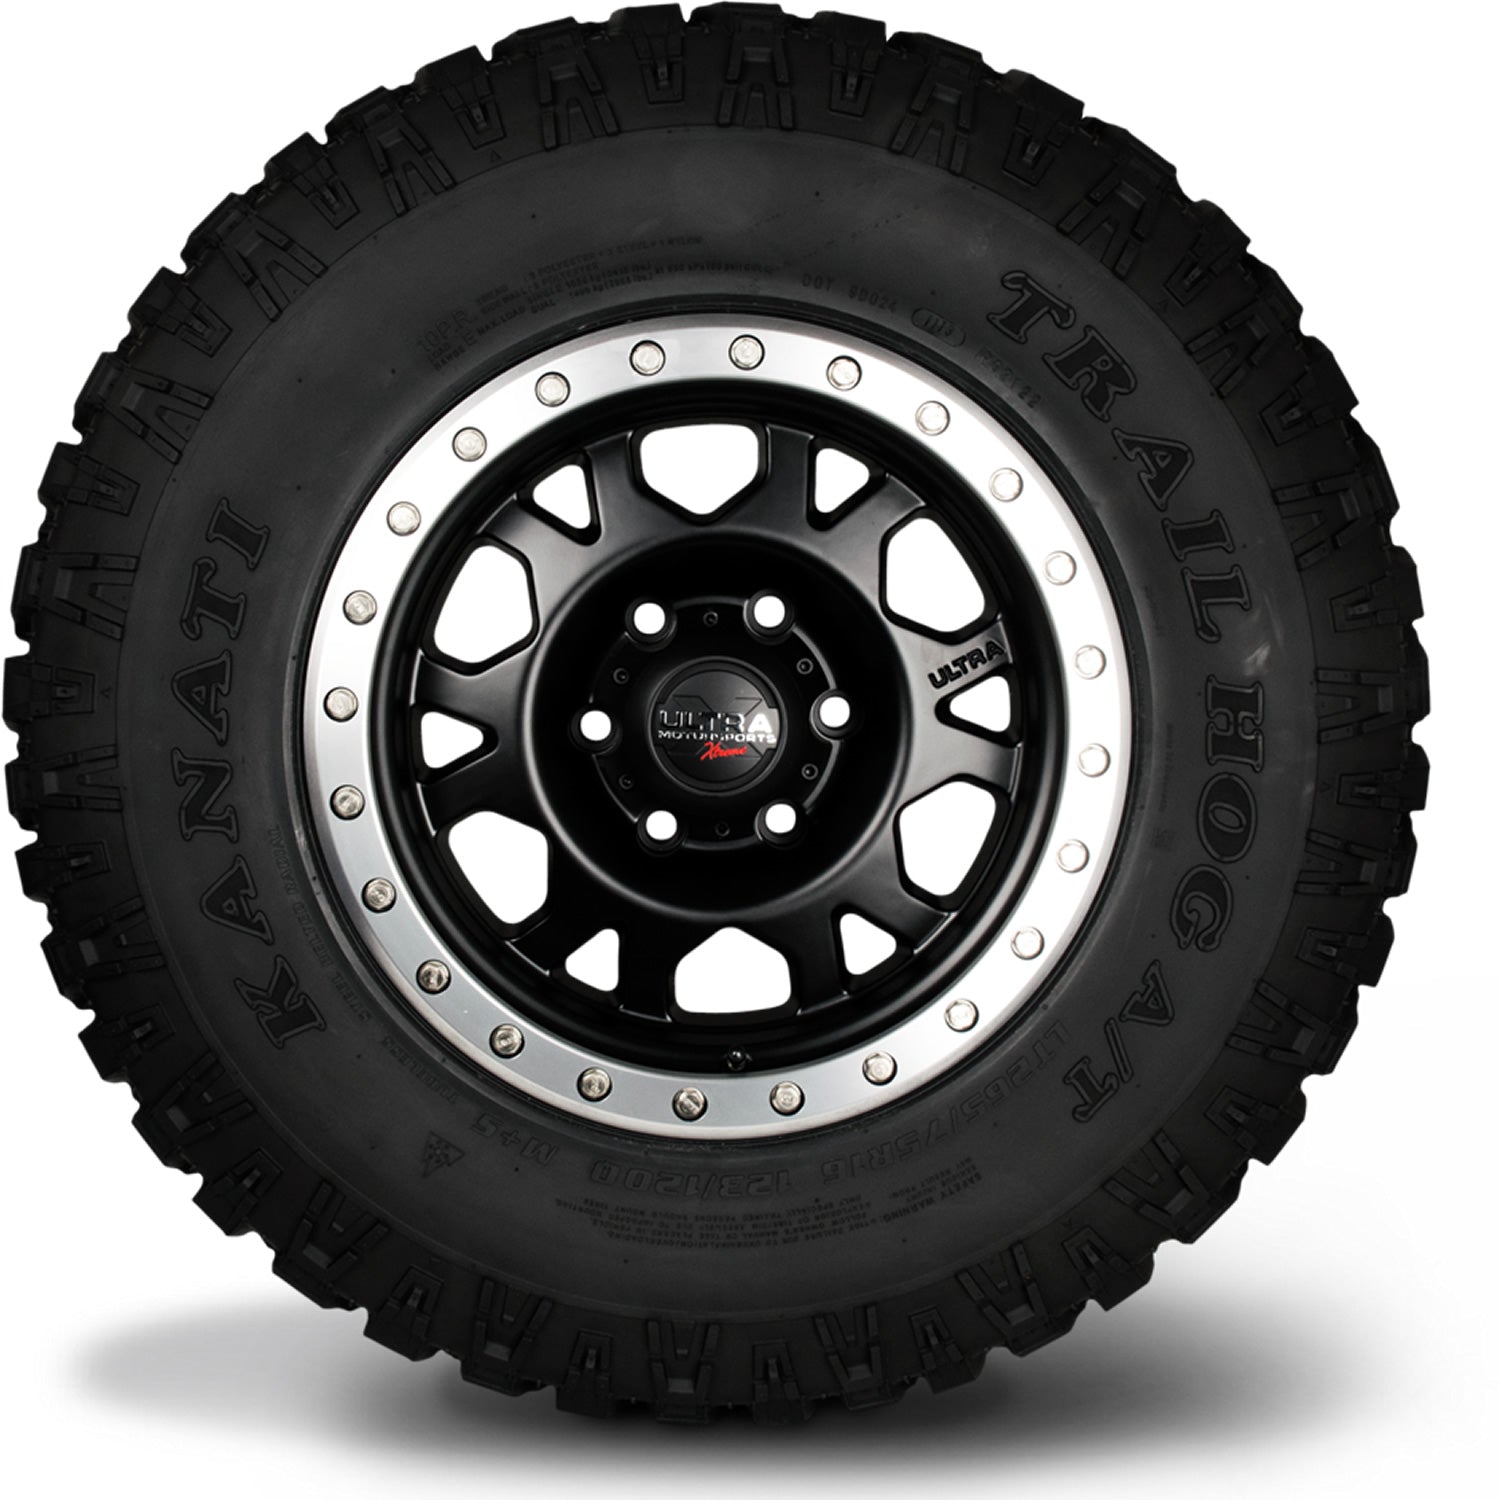 KANATI TRAIL HOG LT305/55R20 (33.4X12.4R 20) Tires